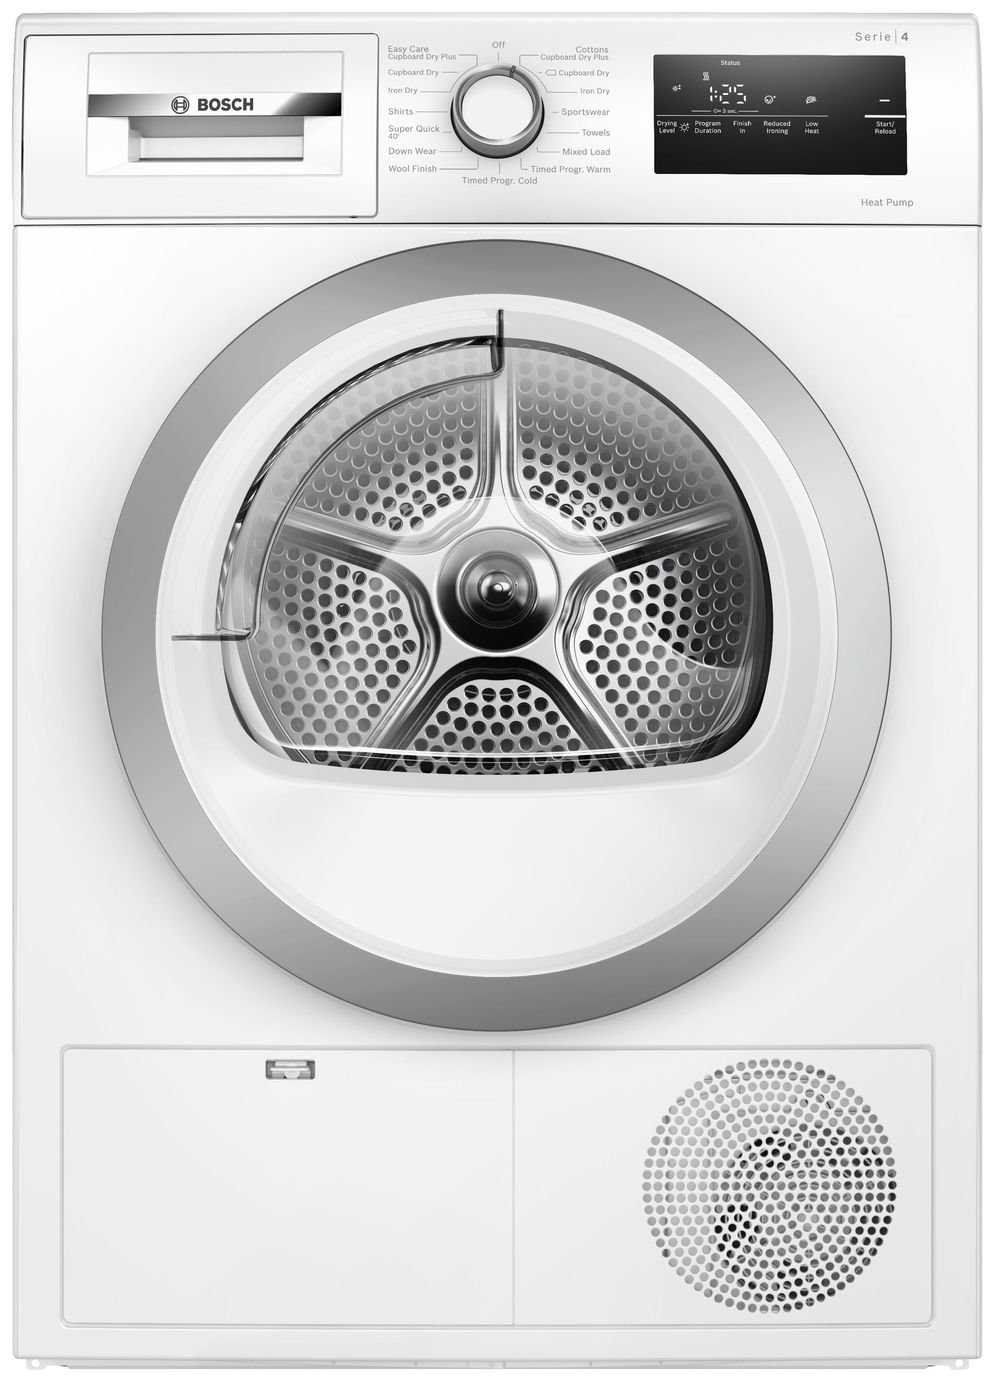 Bosch WTH85223GB 8KG Heat Pump Tumble Dryer - White